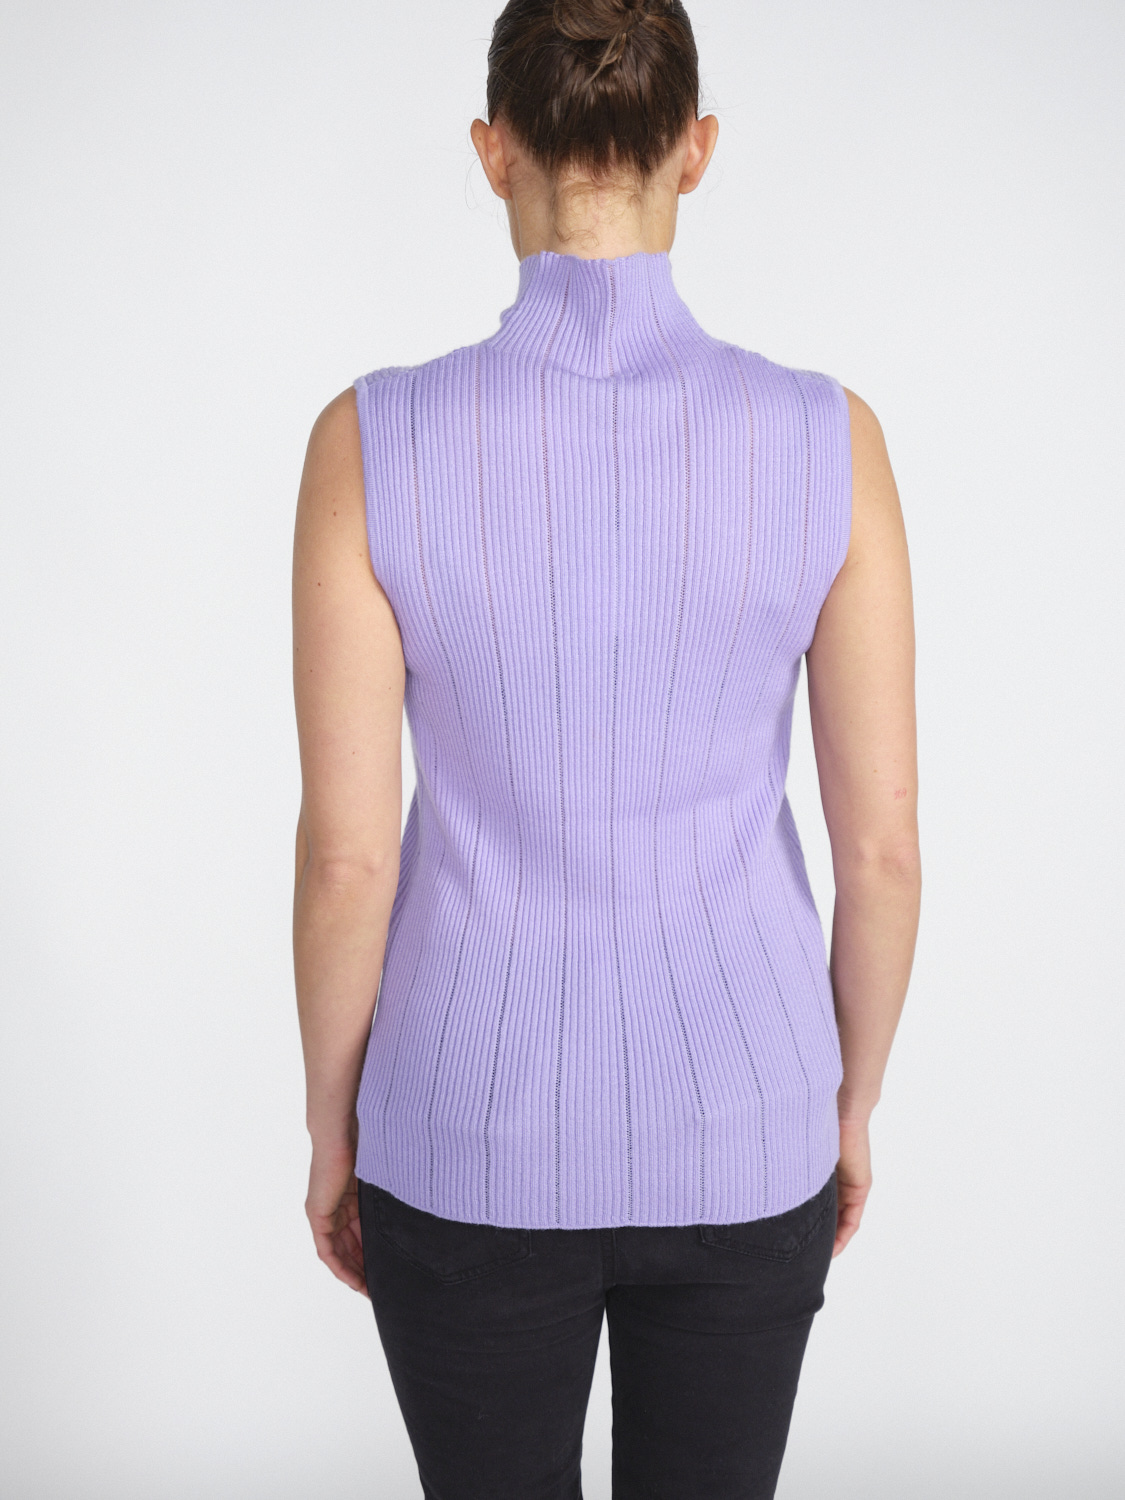 Iris von Arnim Loulou - Knitted top in cashmere-silk blend  lila S